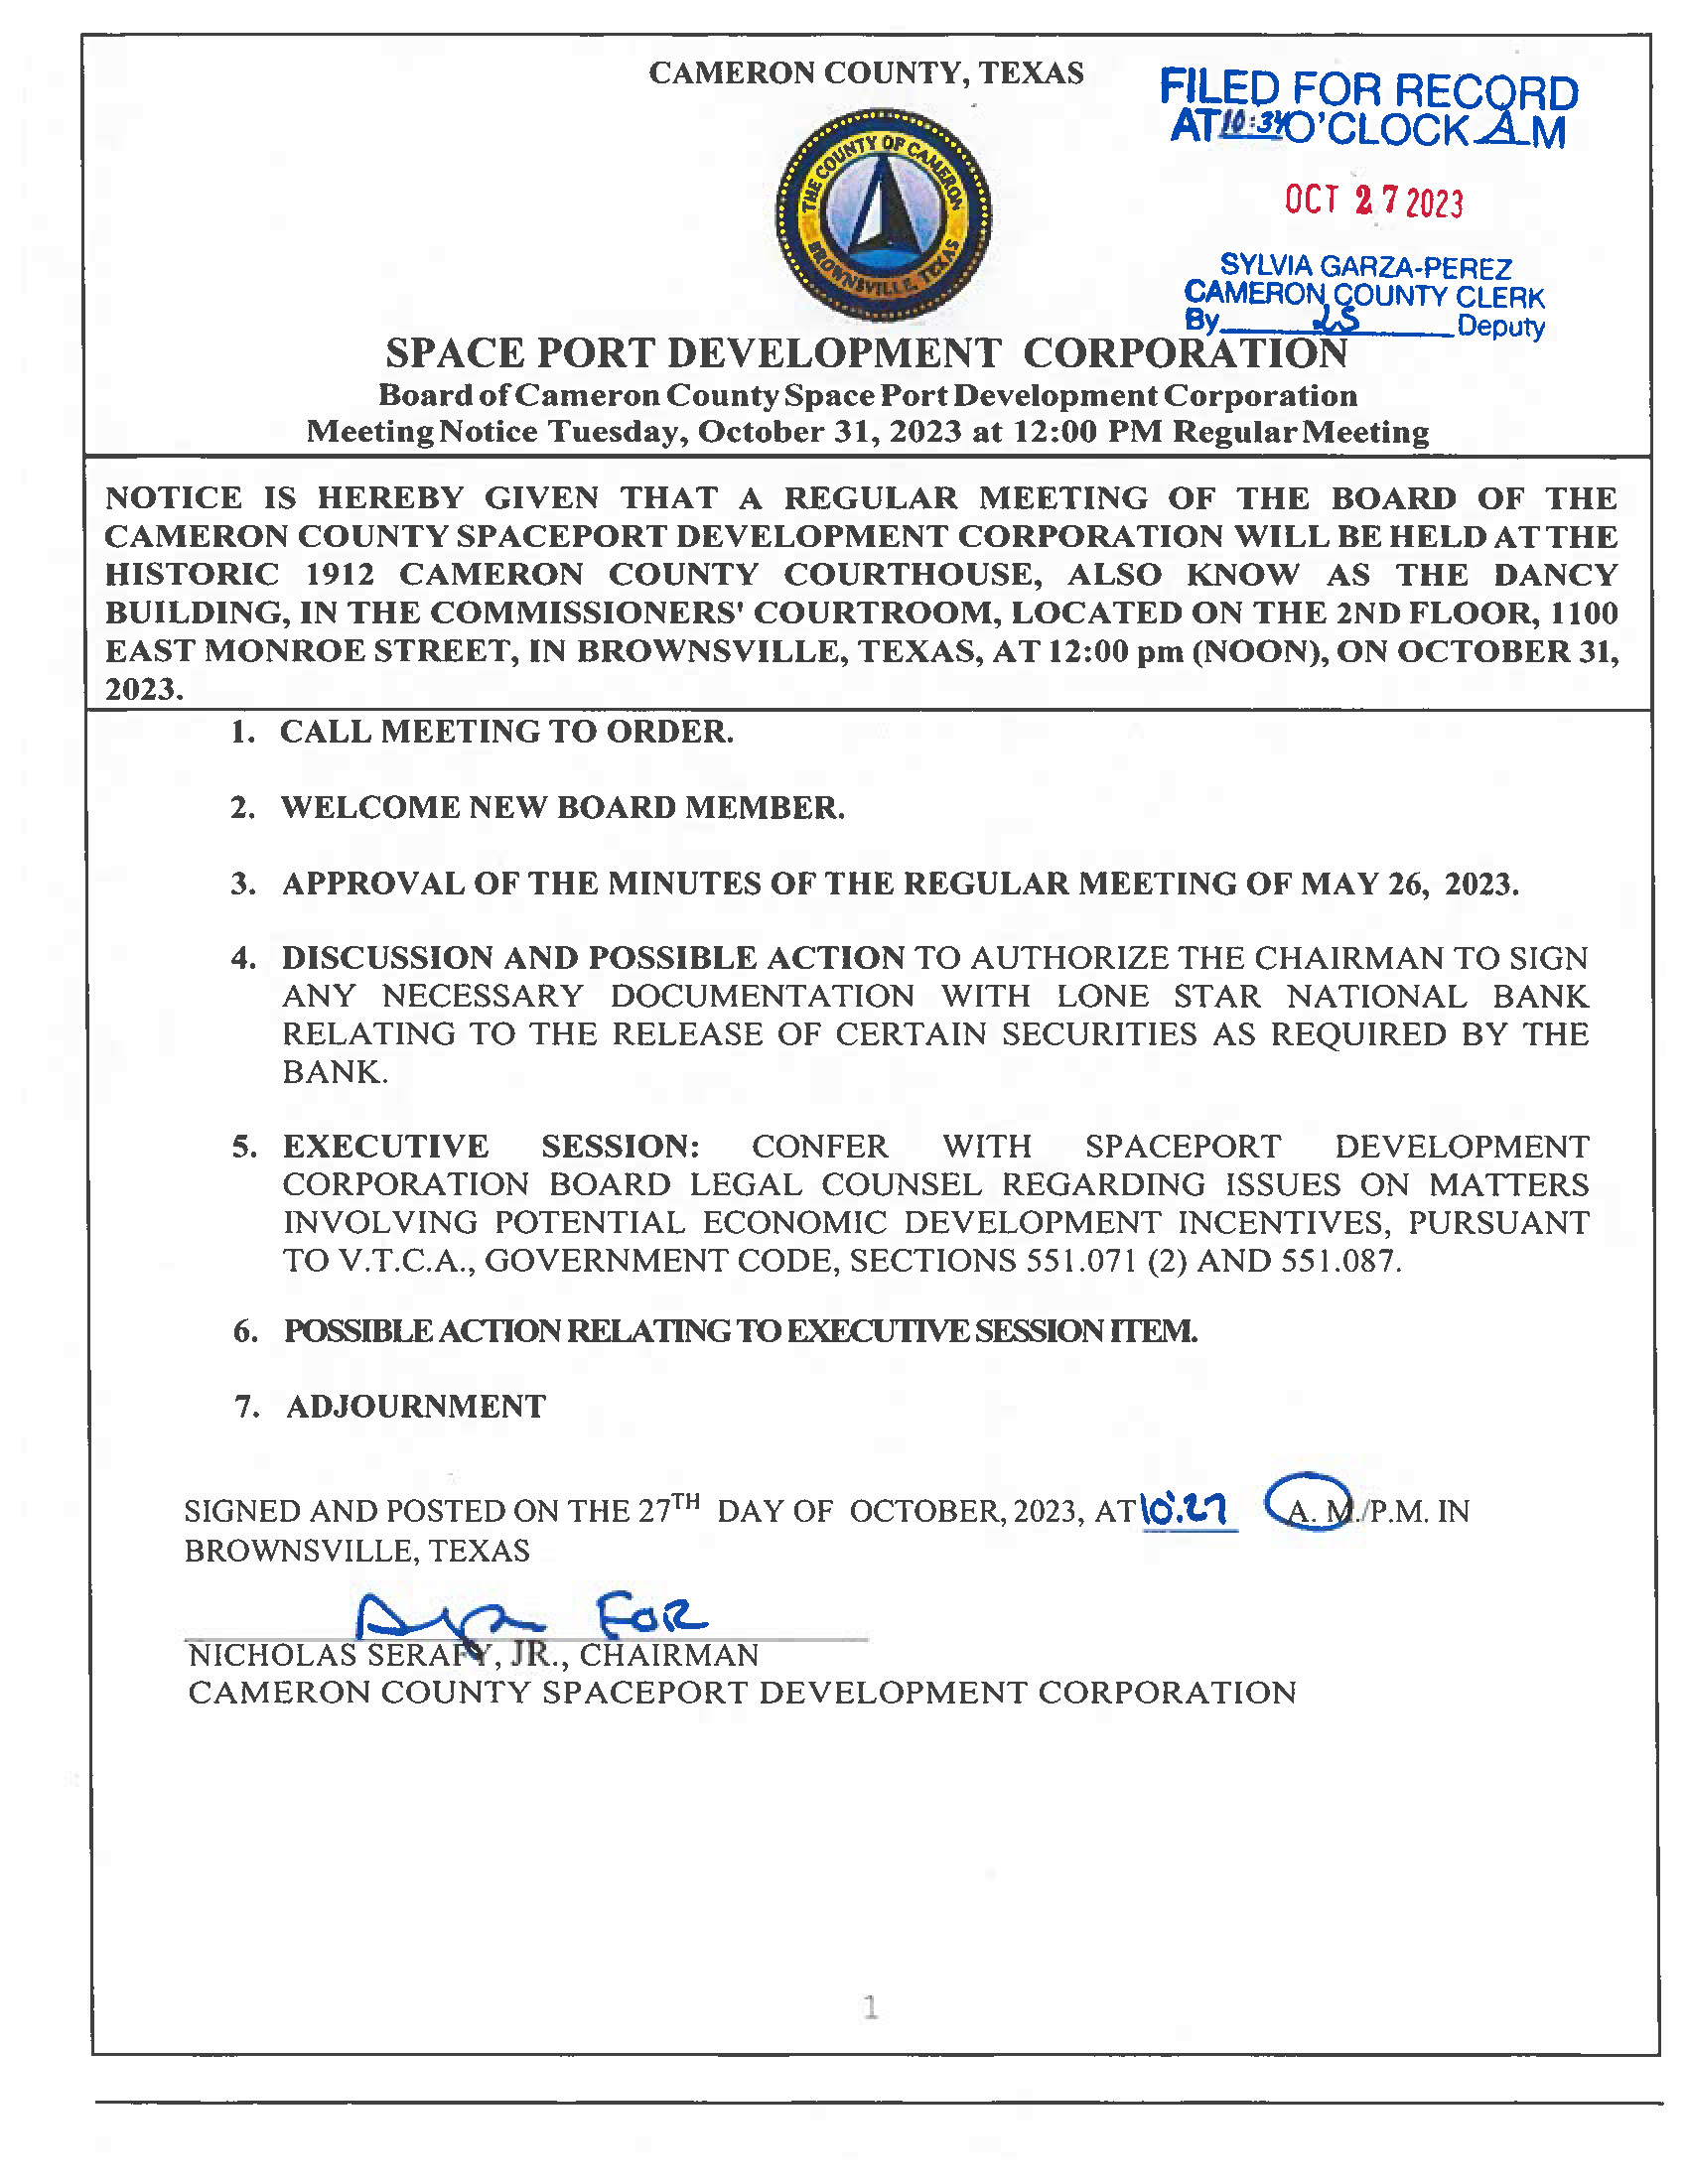 AGENDA SPACE PORT DEVELOPMENT CORPORATION MEETING OF 10.31.2023 002